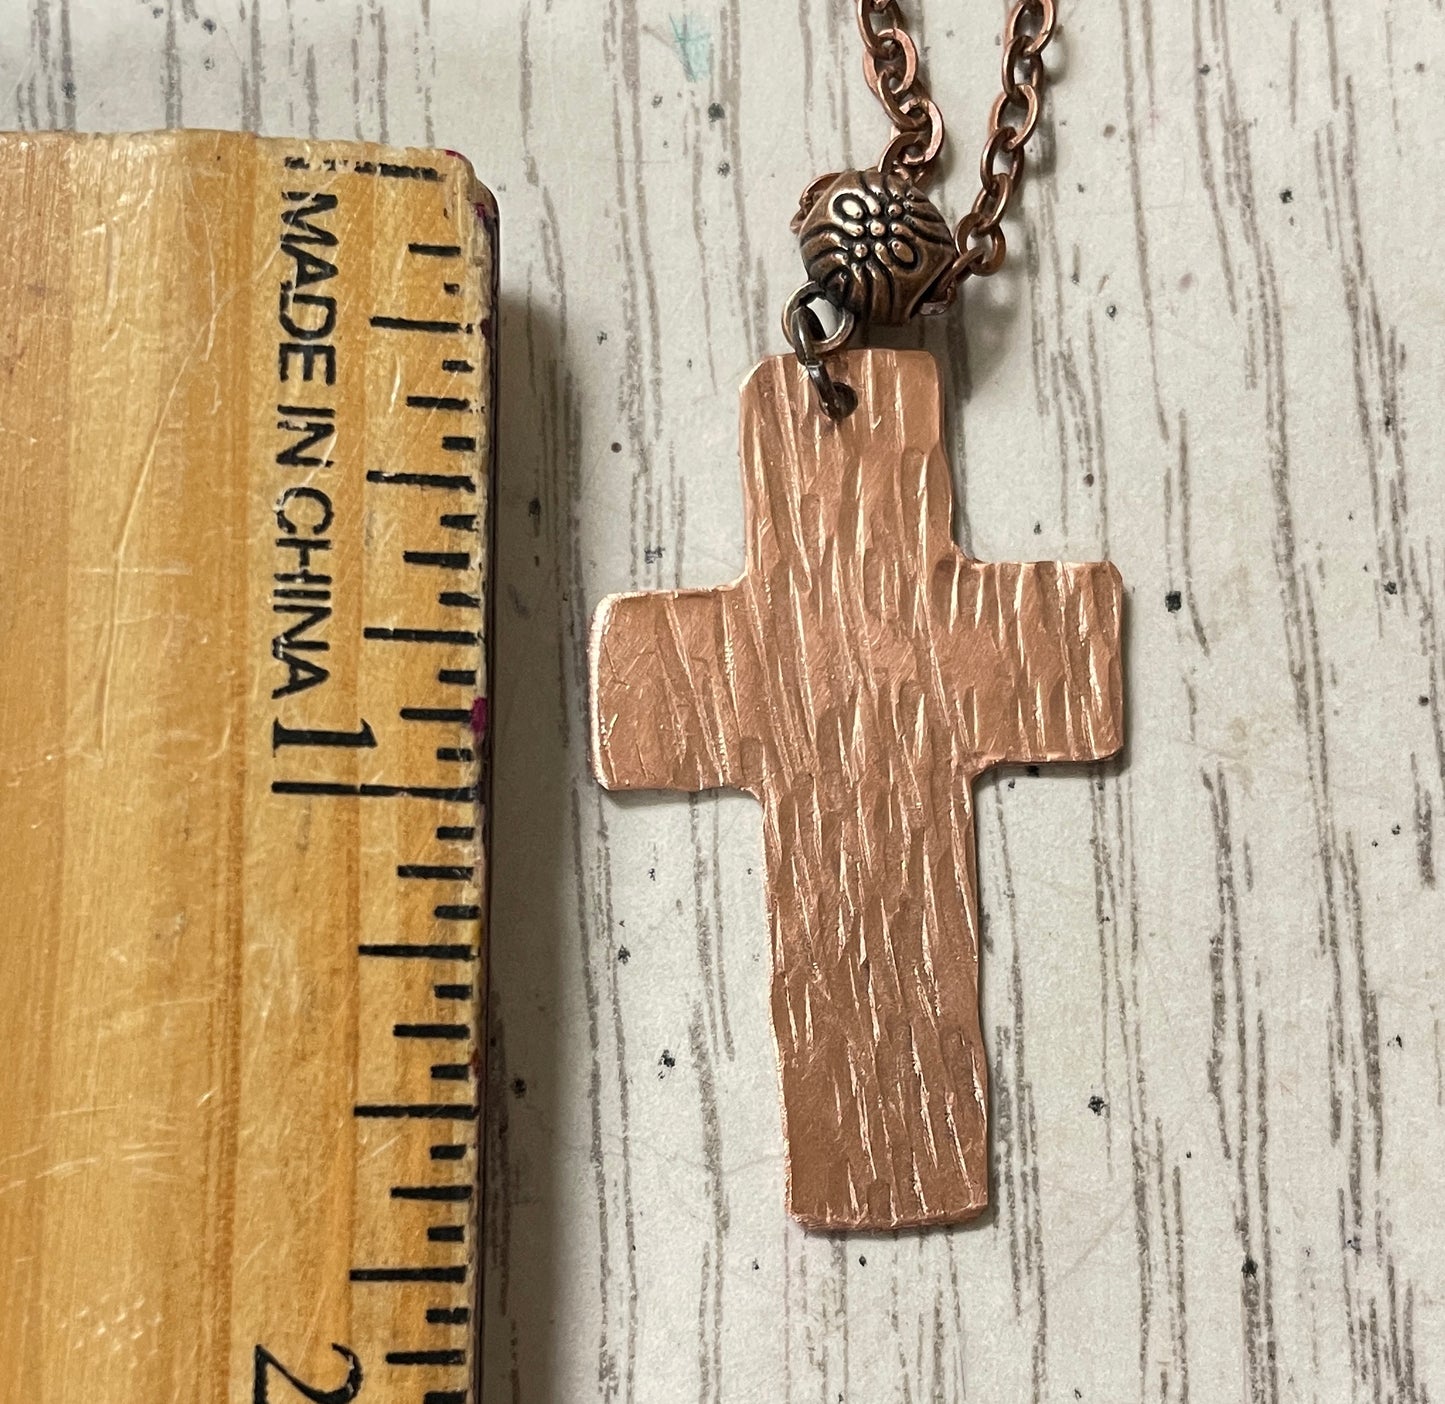 Textured Copper Cross Pendant